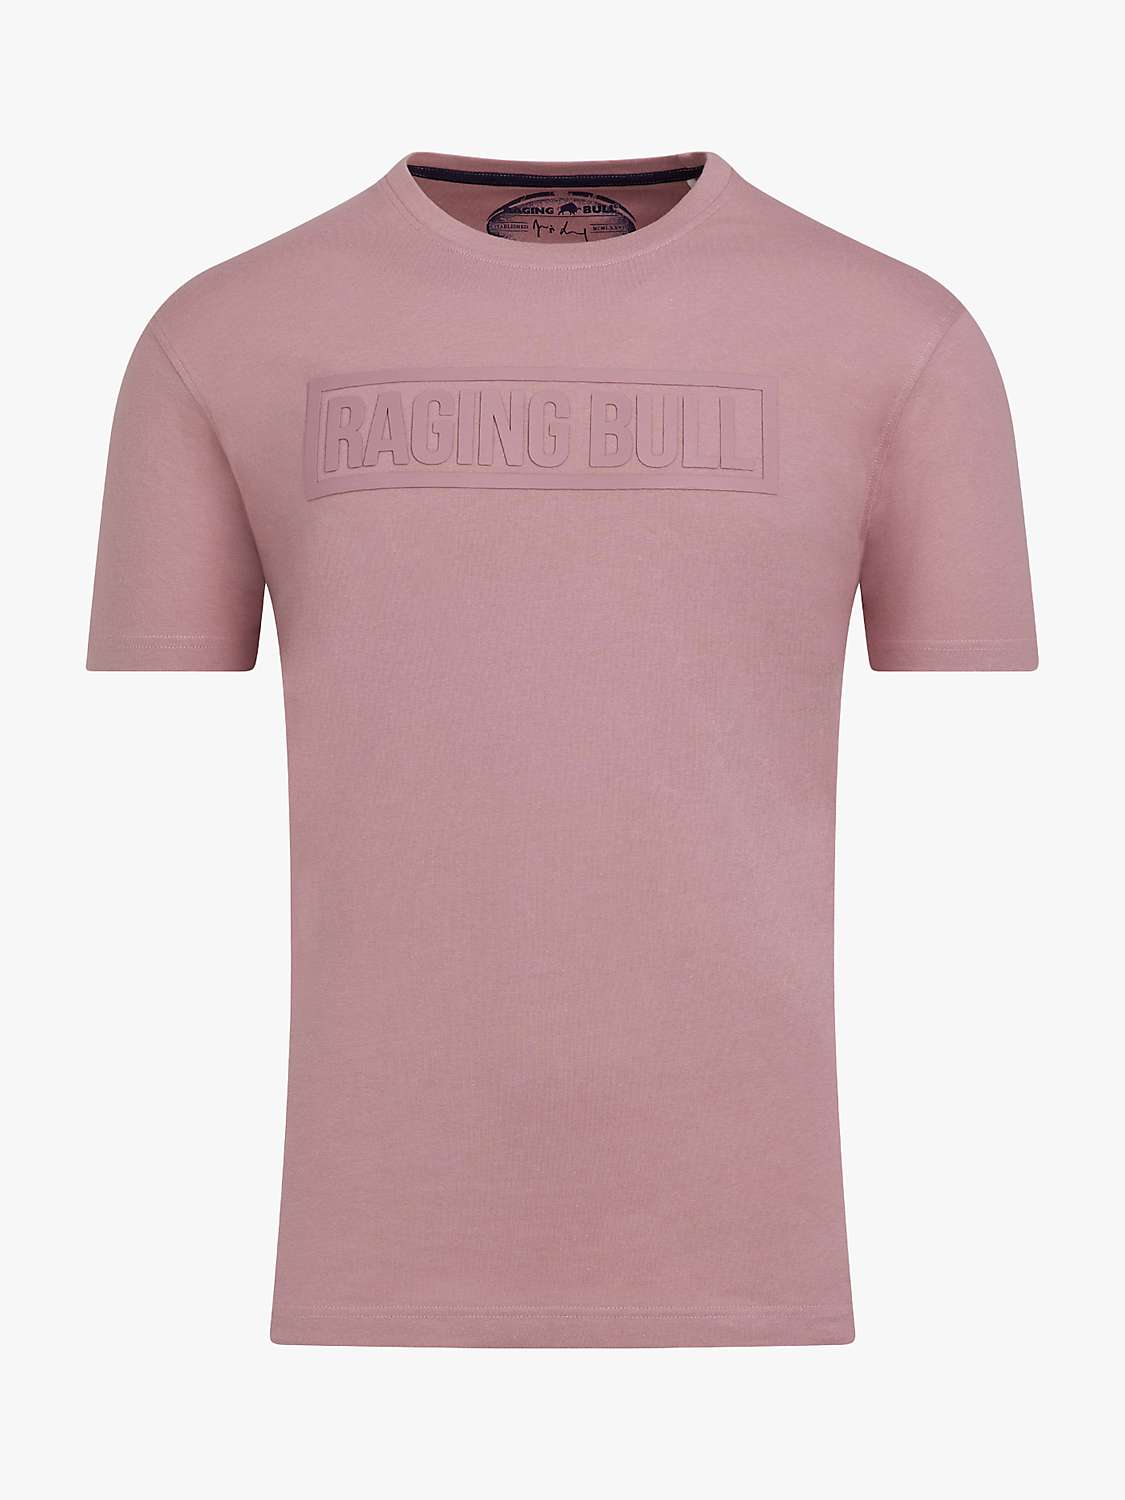 Buy Raging Bull High Build T-Shirt, Rose Online at johnlewis.com